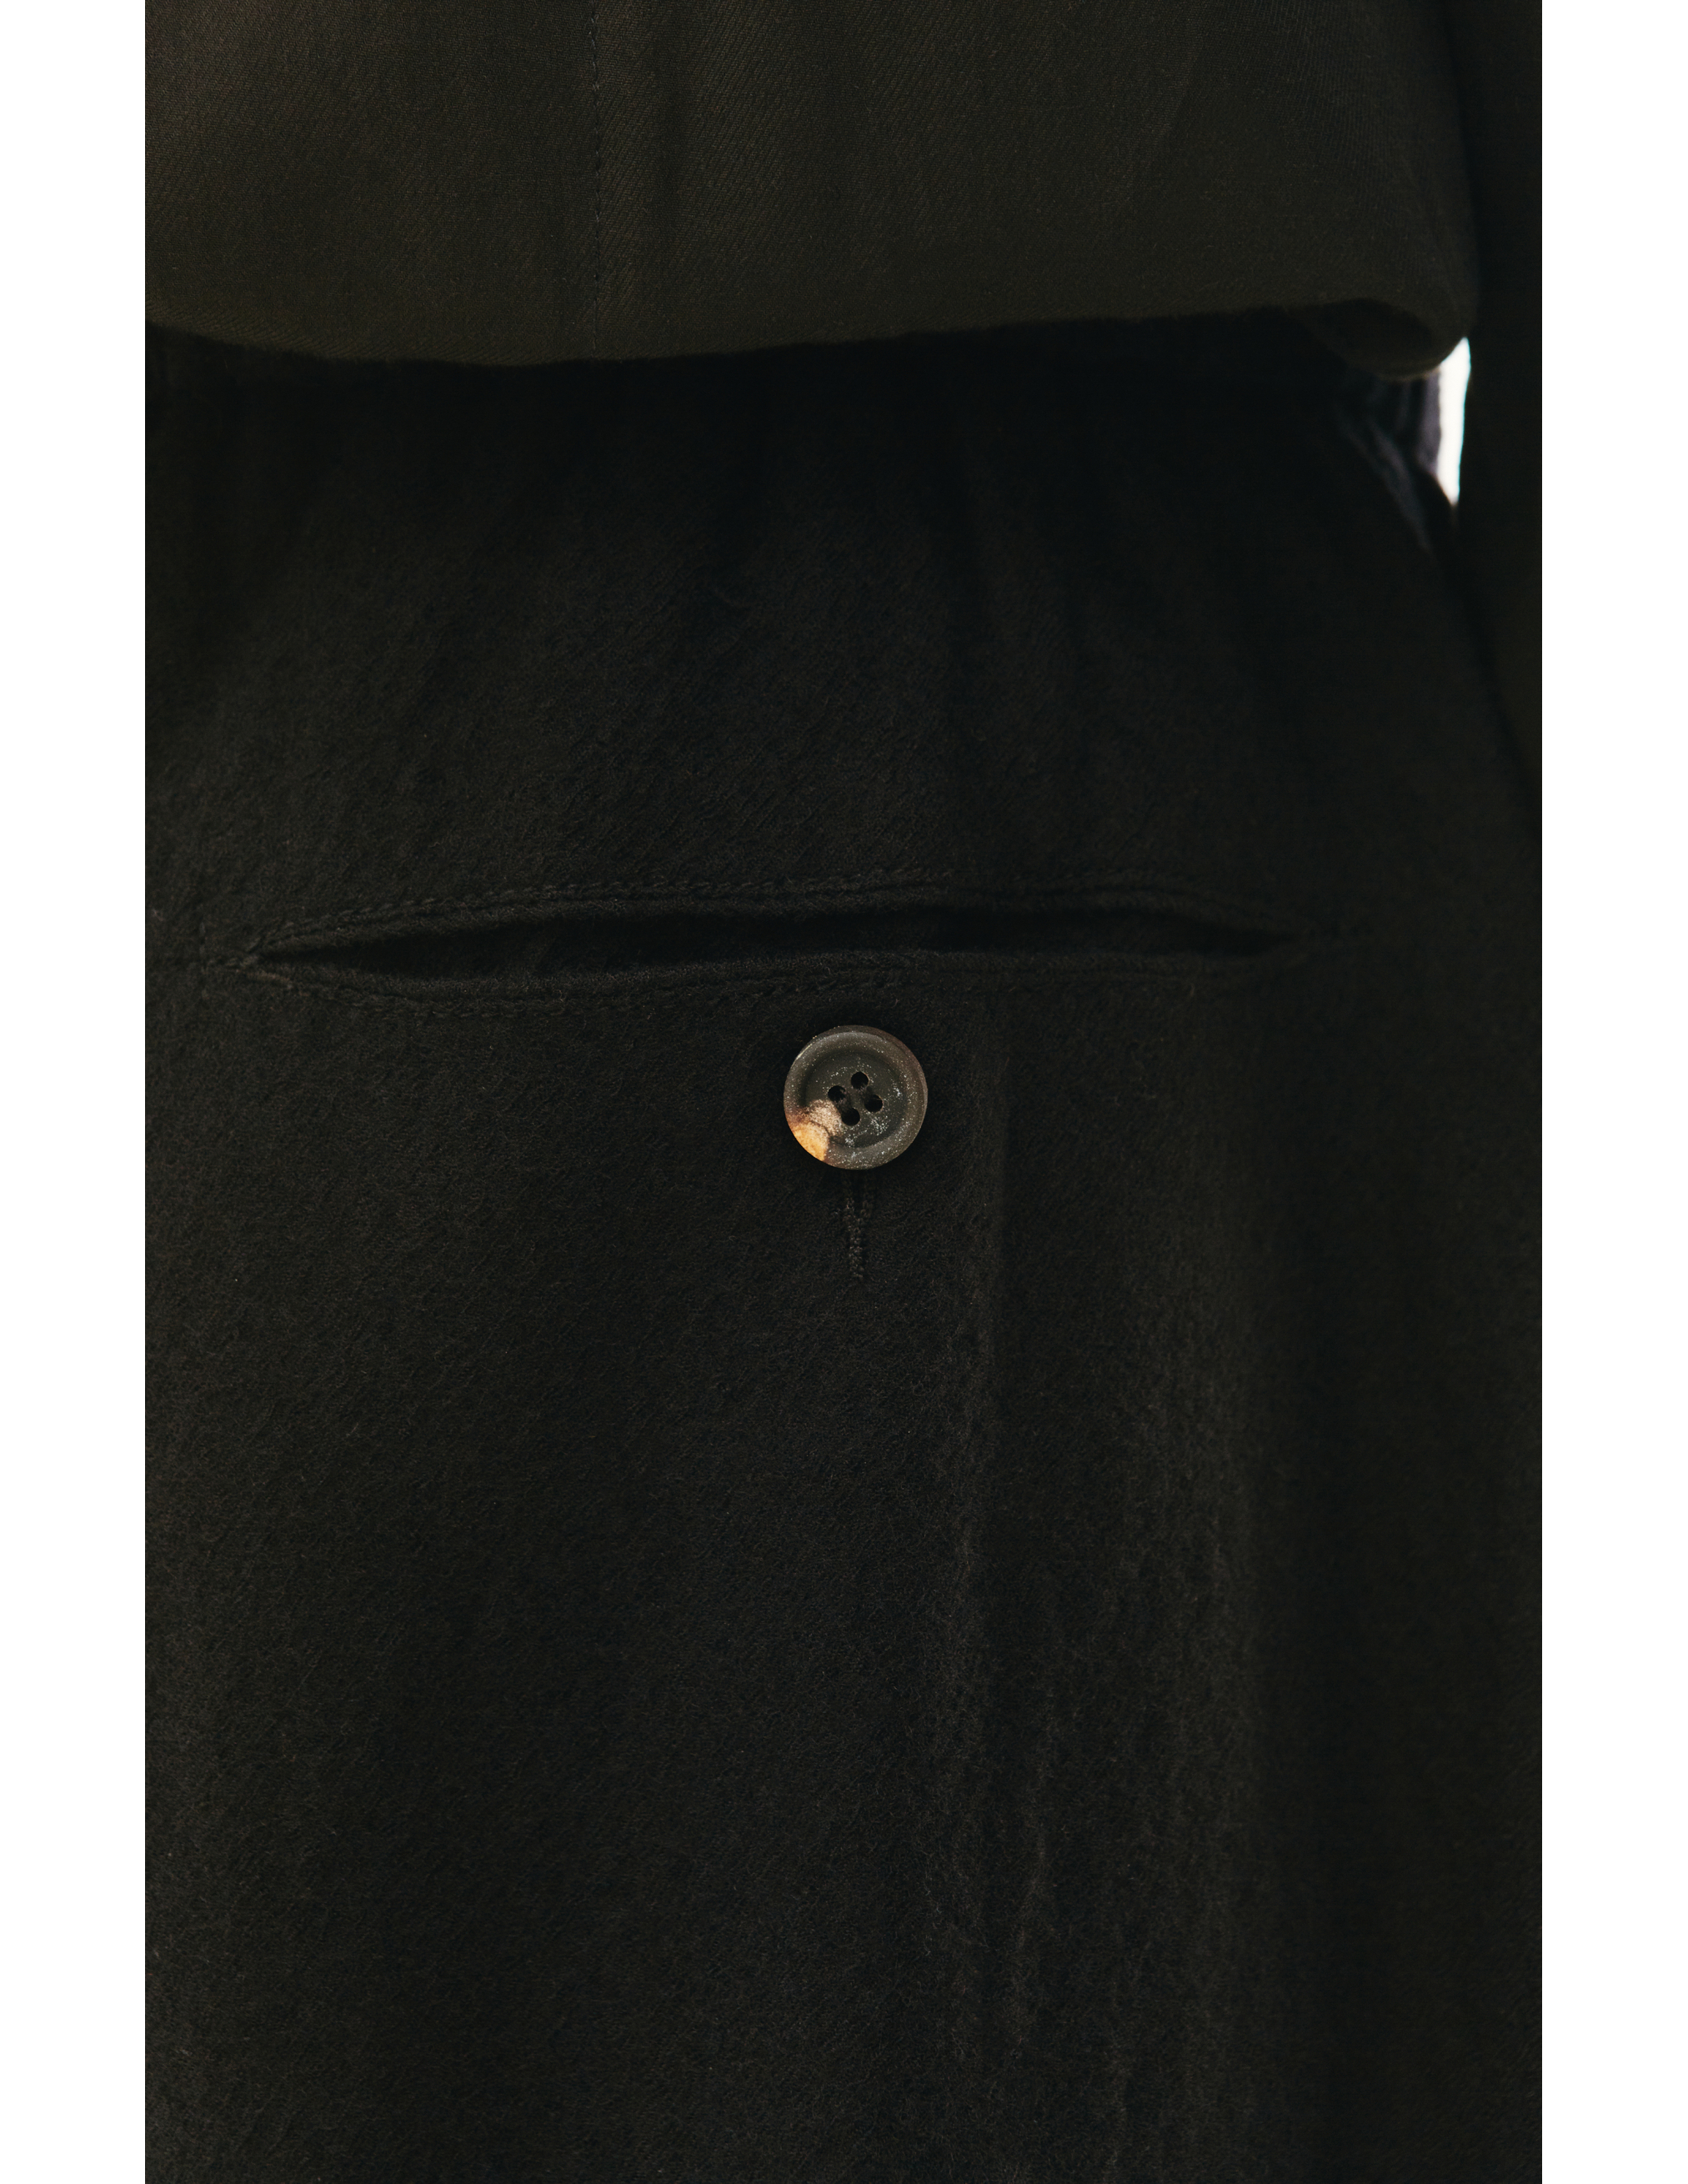 Шерстяные брюки на завязках Ziggy Chen 0M2230511, размер 52 - фото 4